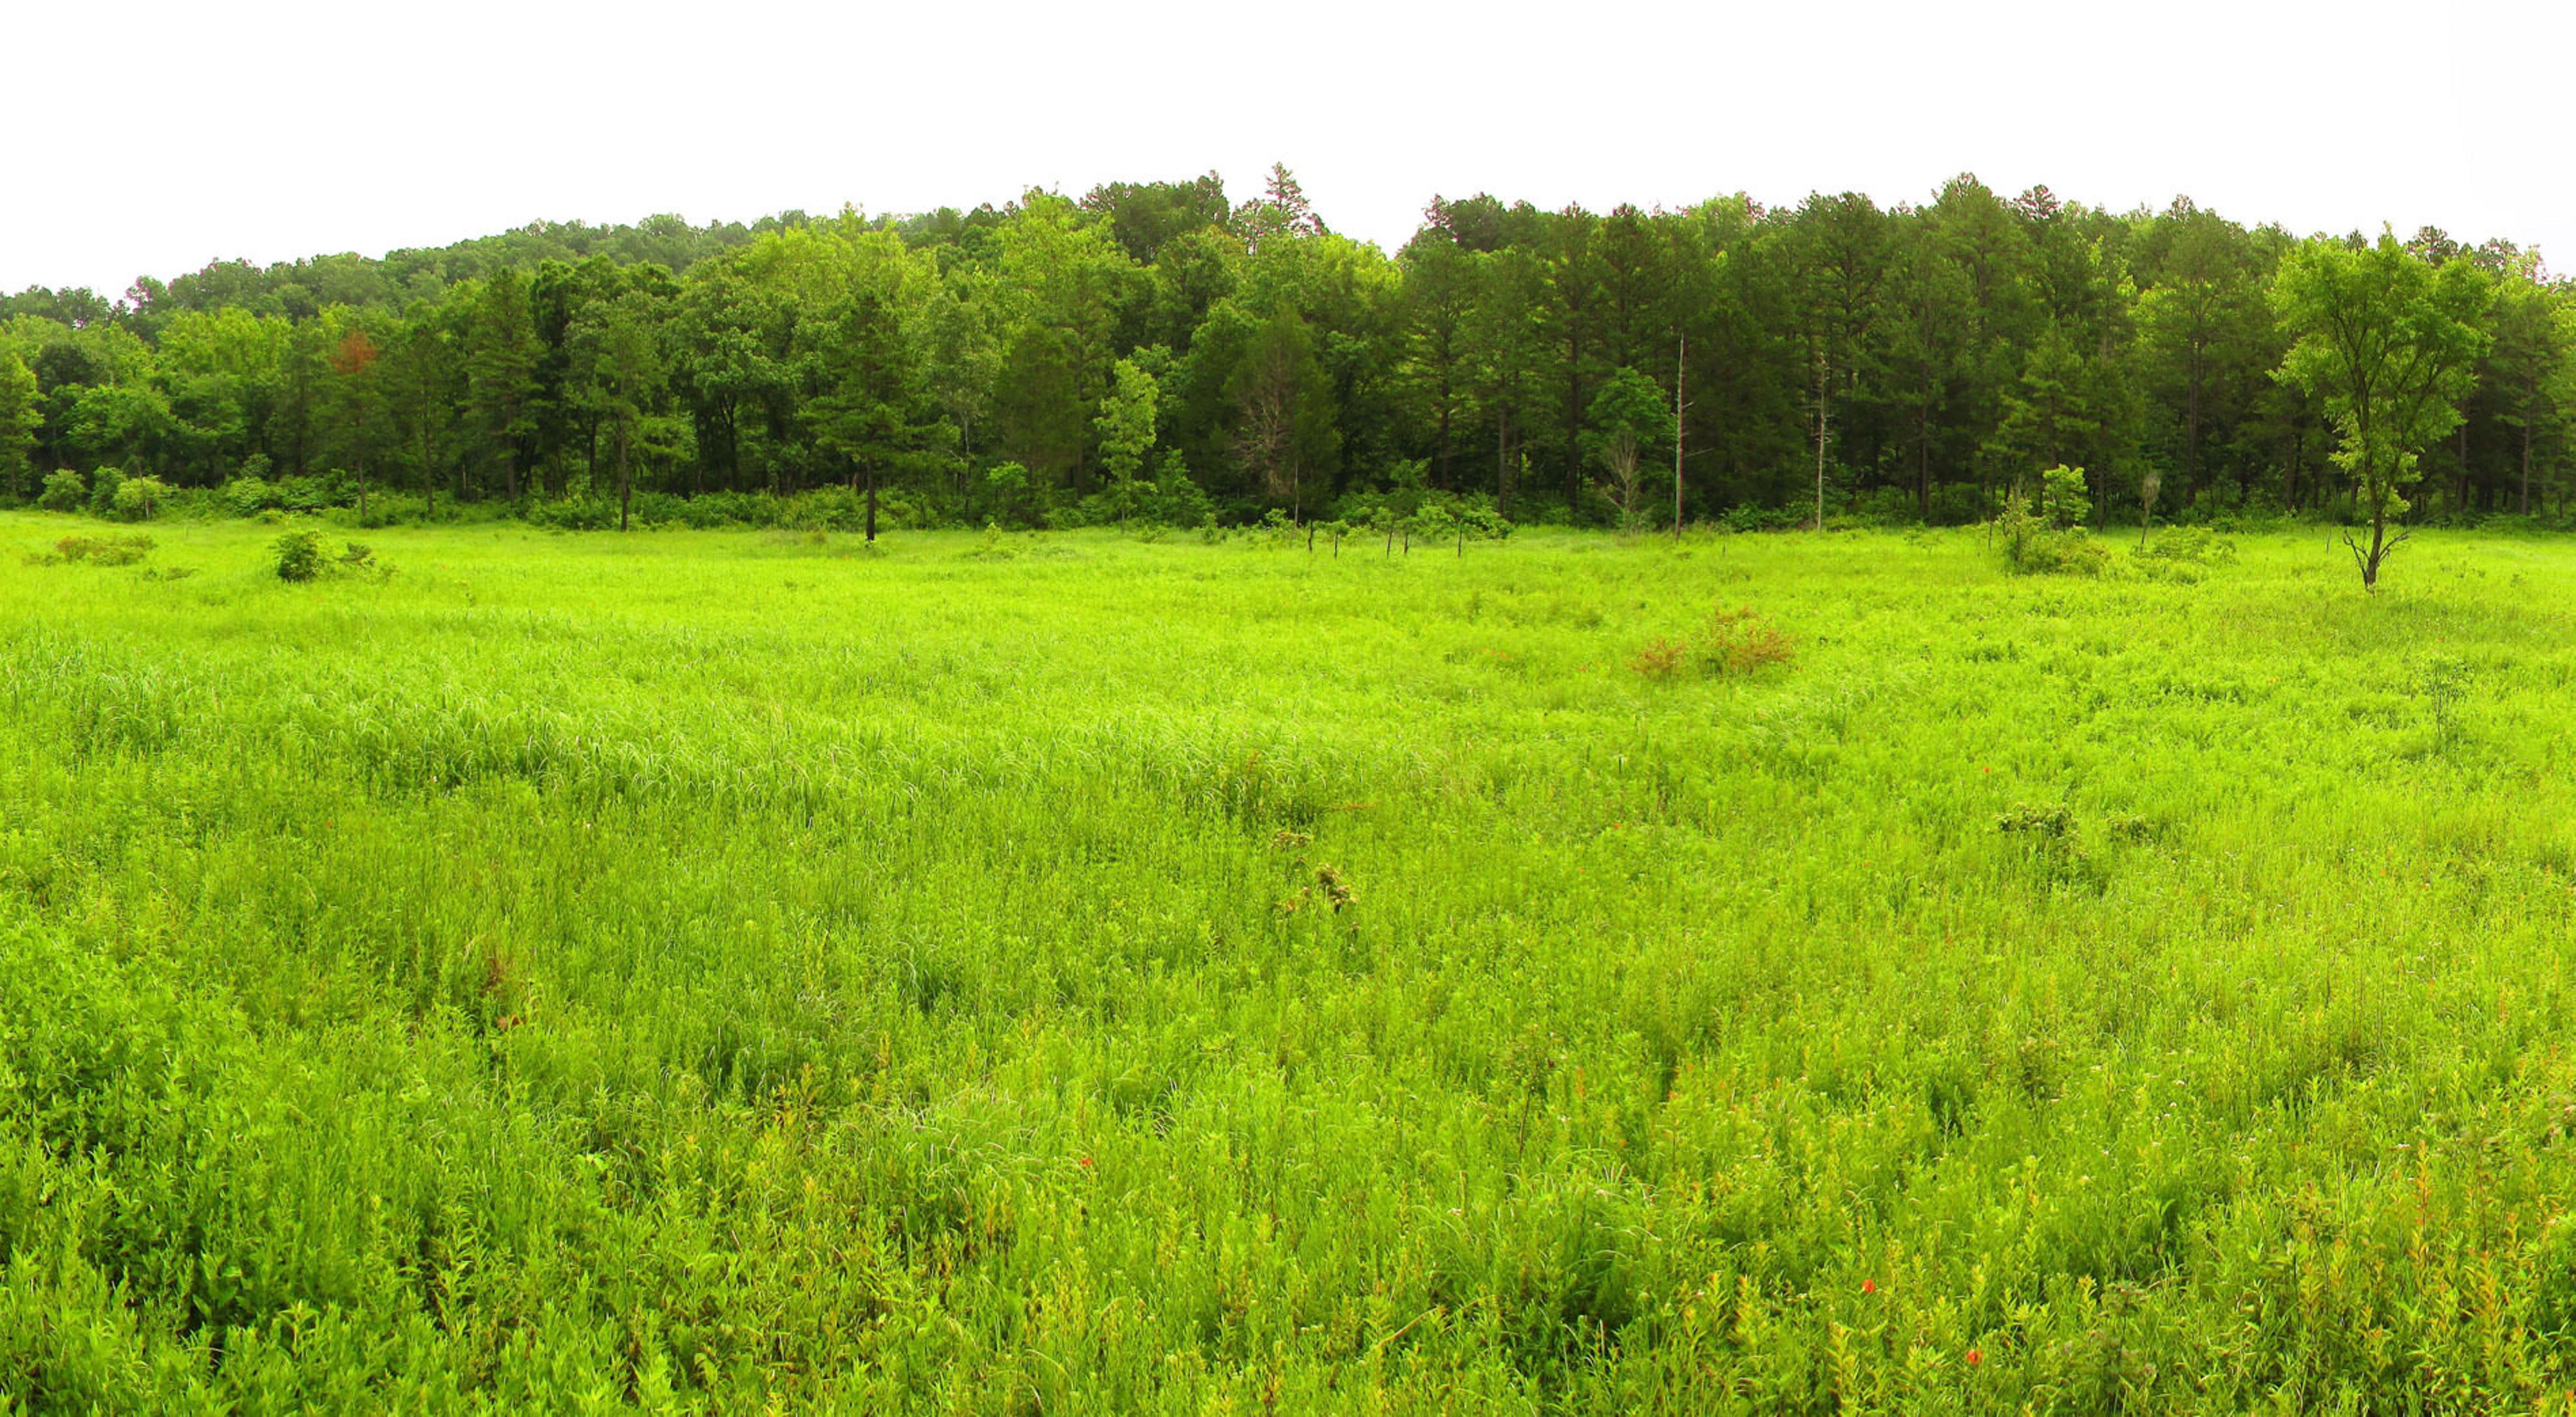 Panorama of the Missouri preserve Grasshopper Hollow